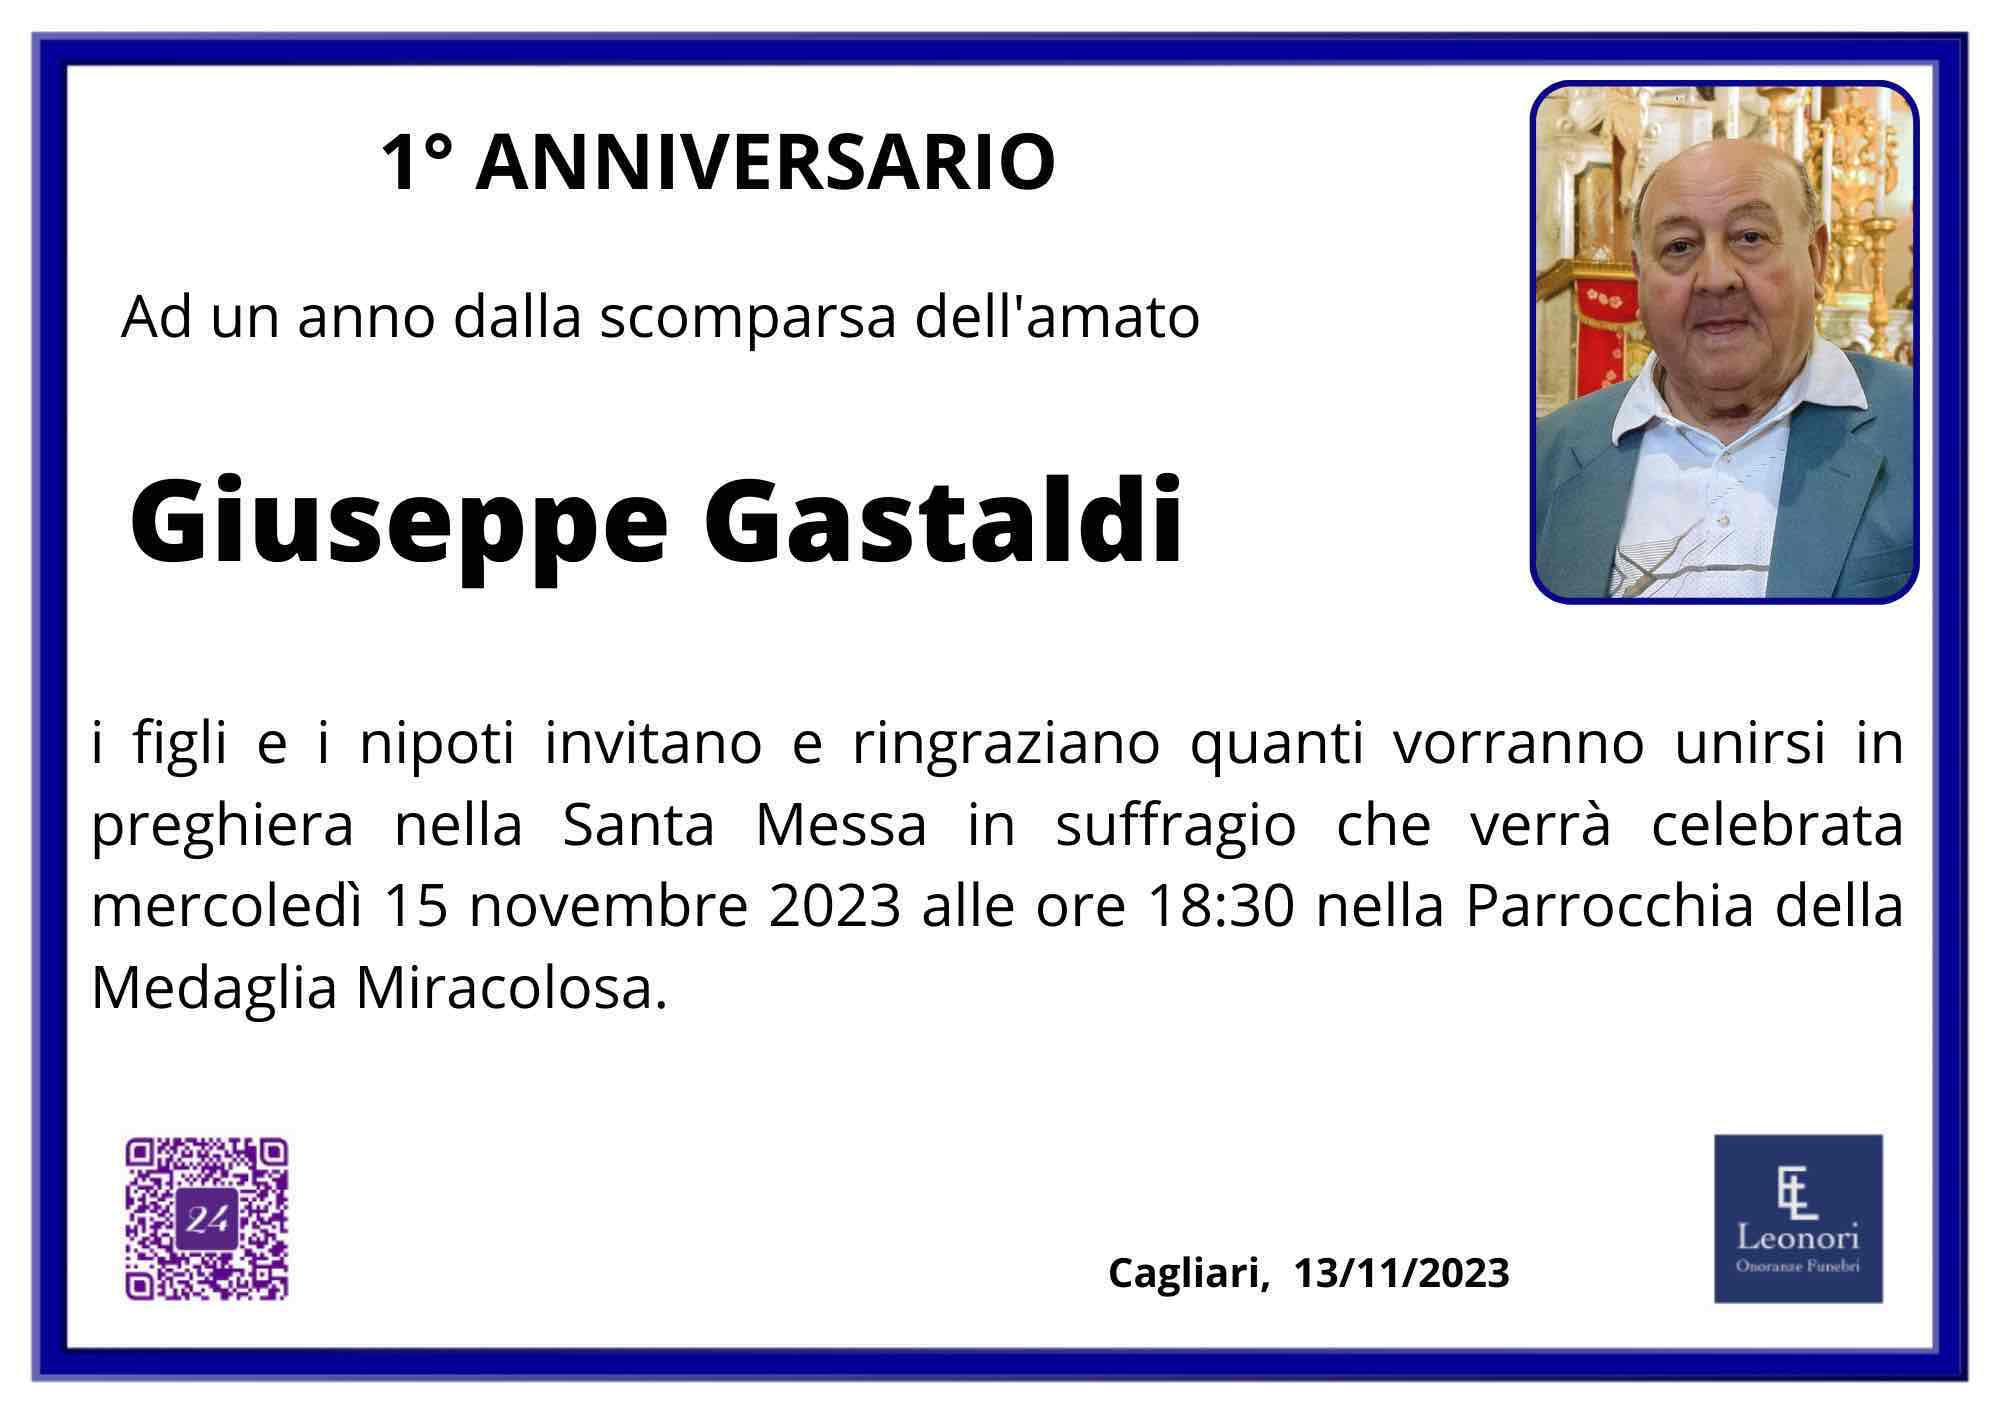 Giuseppe Gastaldi